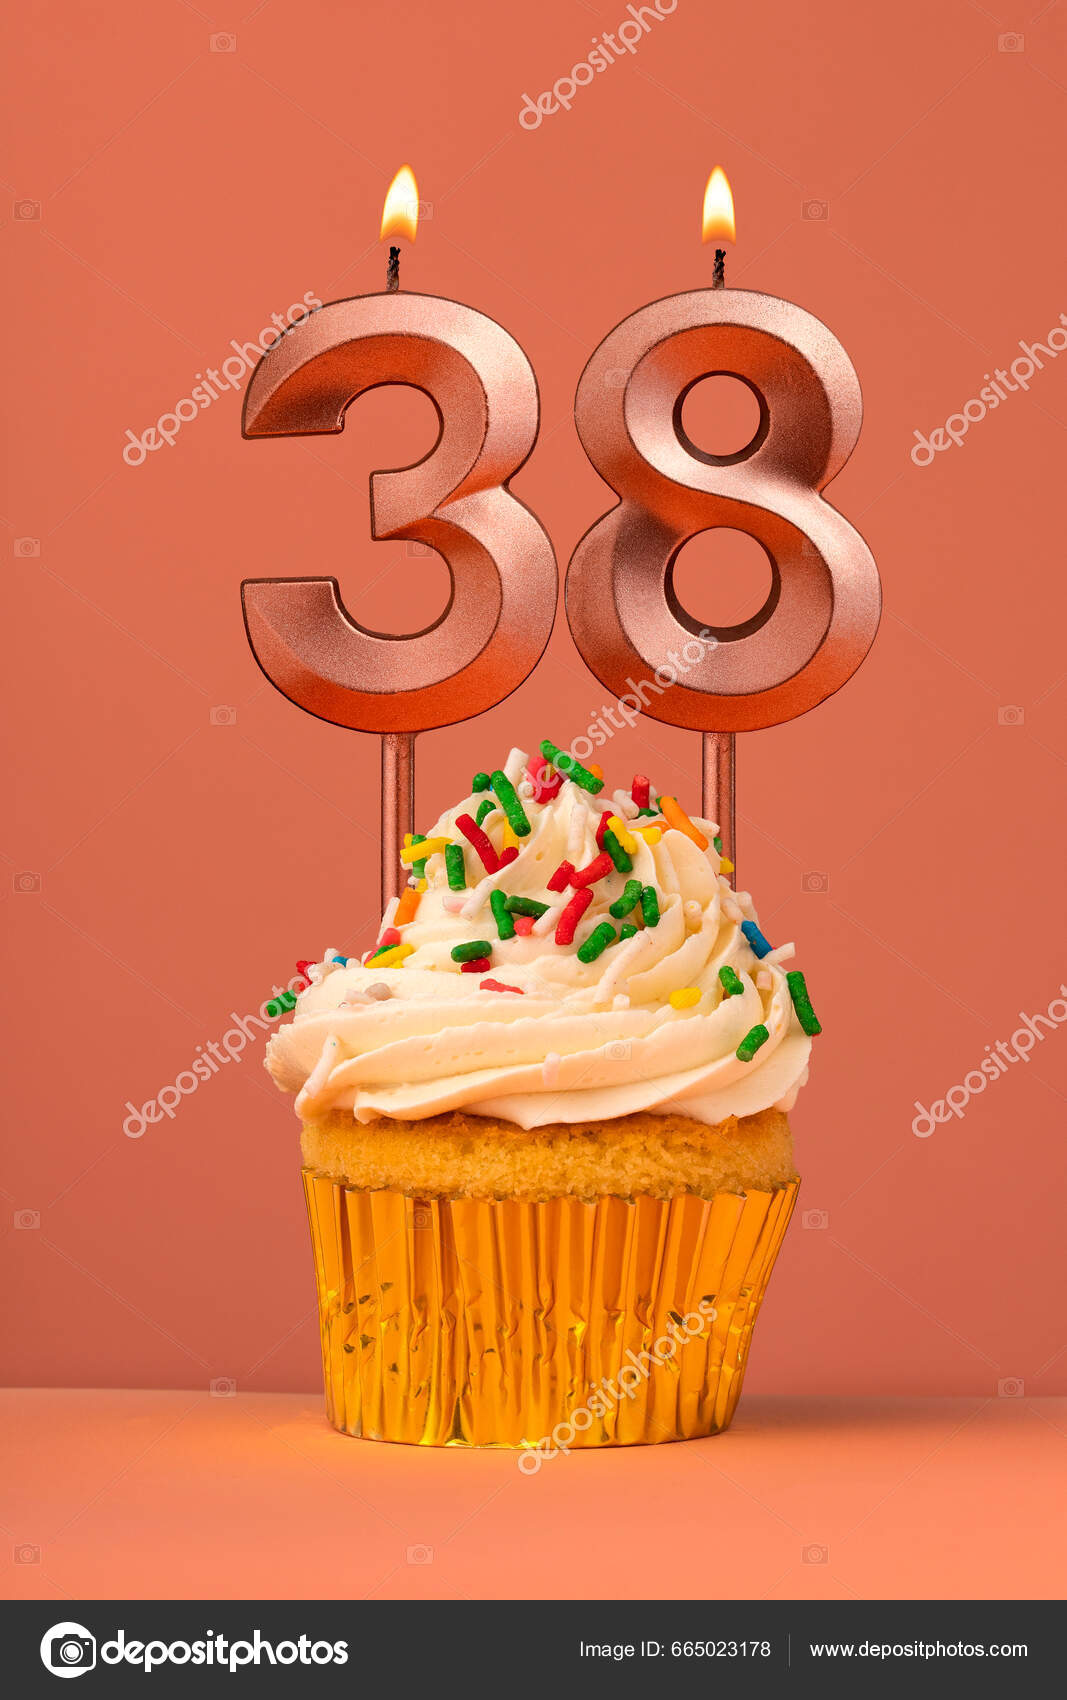 Happy 38th Birthday to Me! - Marisa Mohi